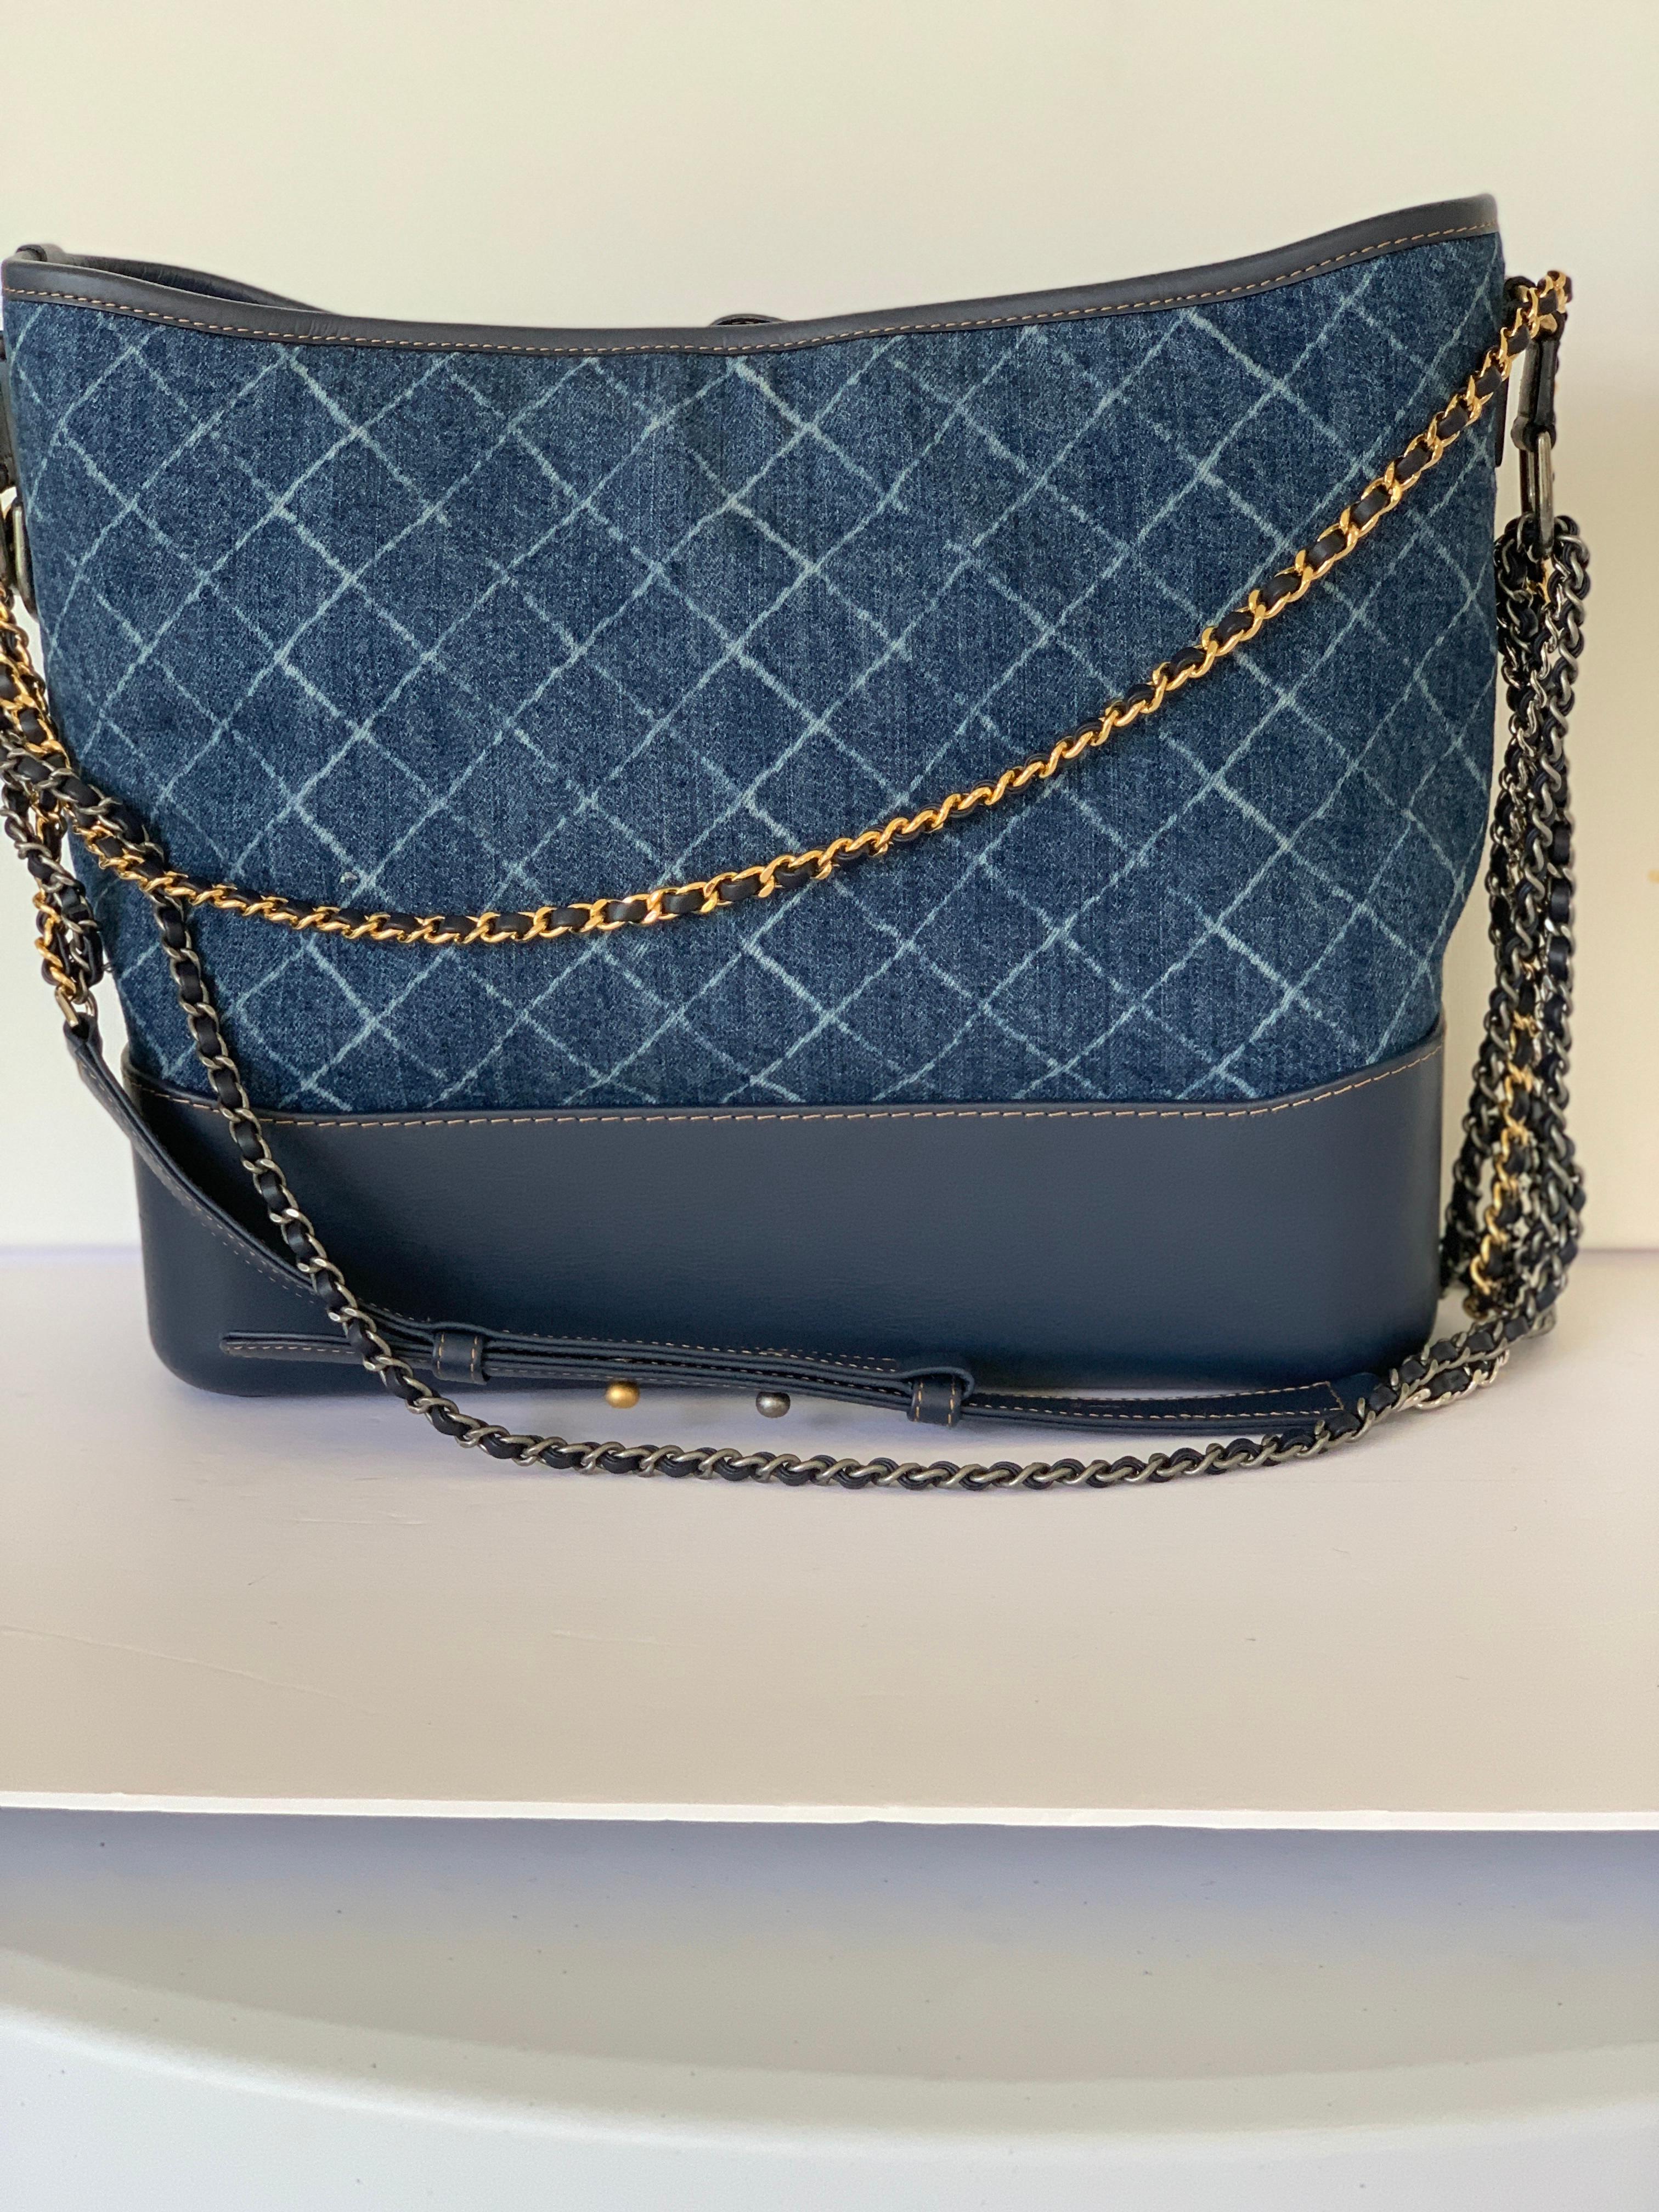 Black Chanel Gabrielle Hobo Denim Handbag Bag 